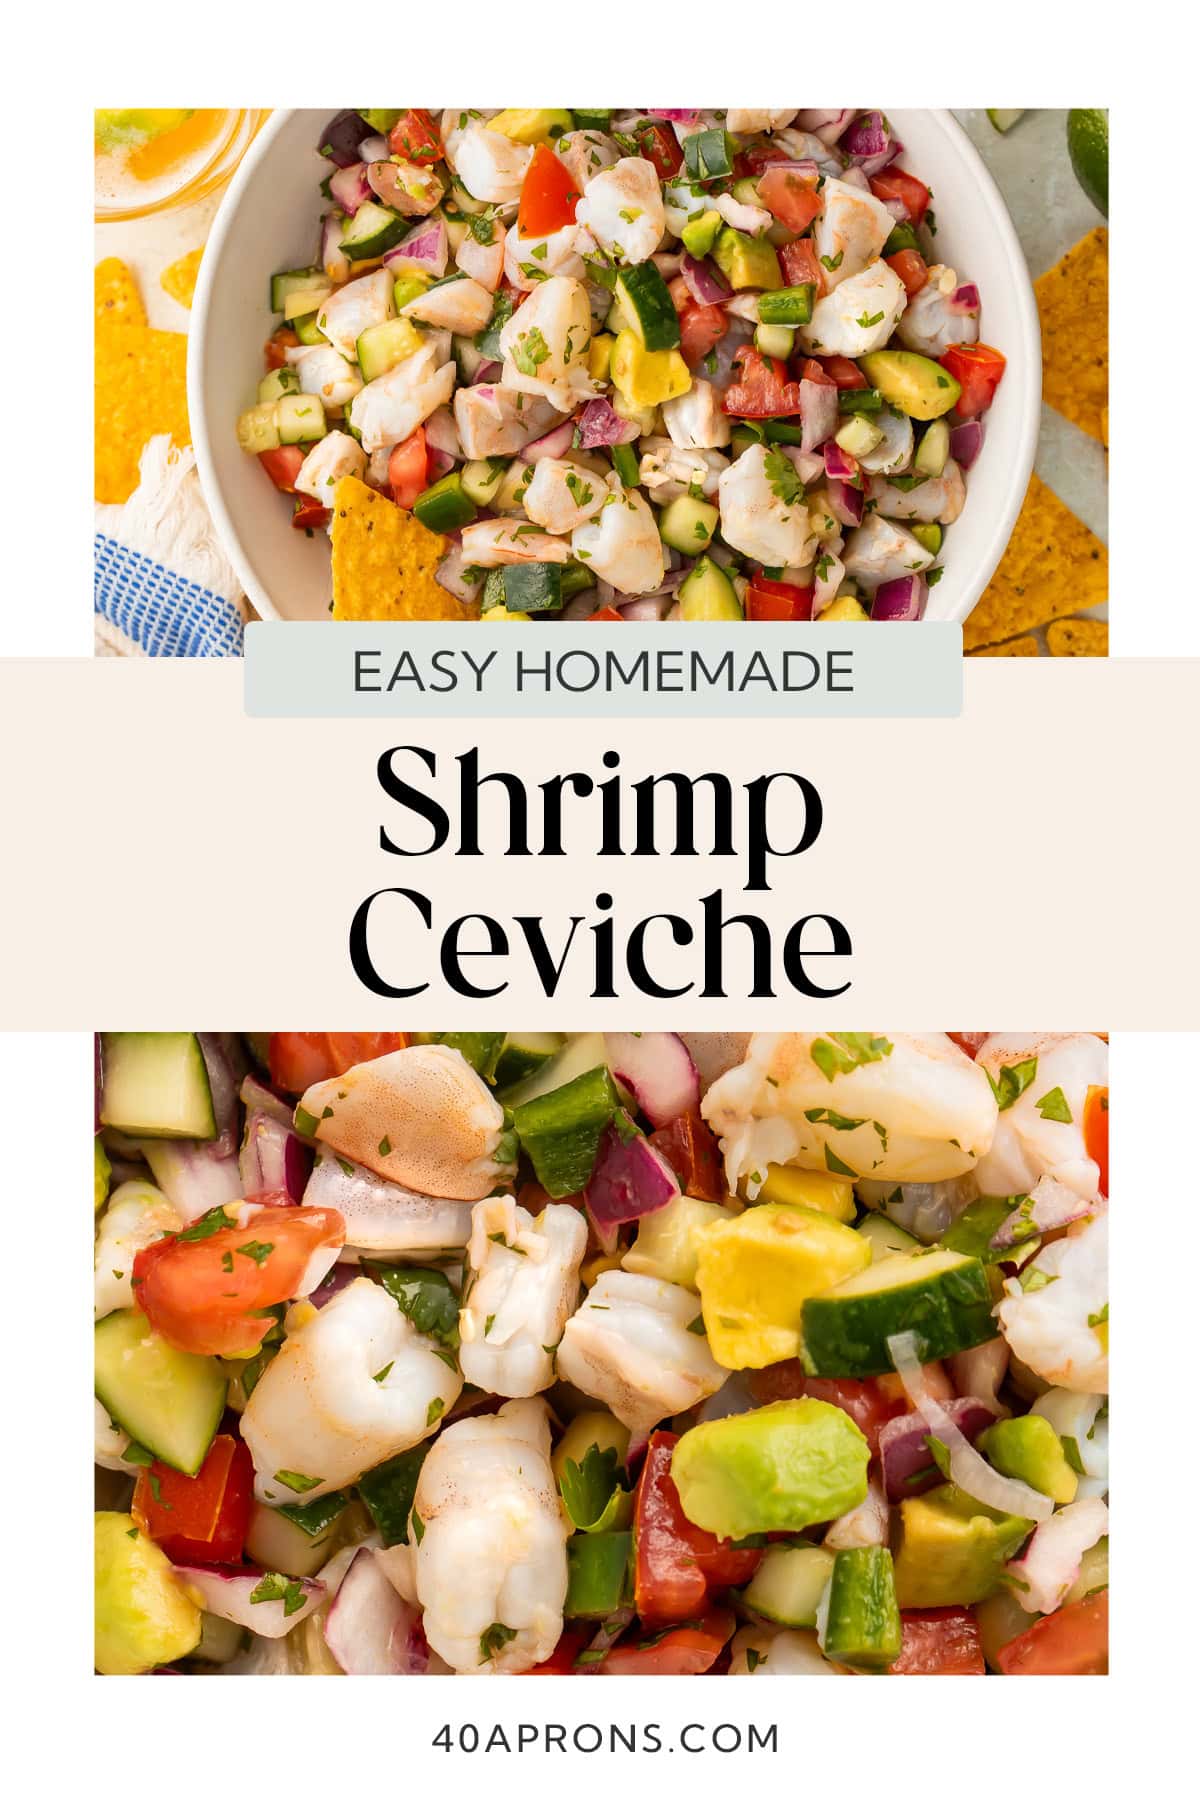 Pin graphic for shrimp ceviche.